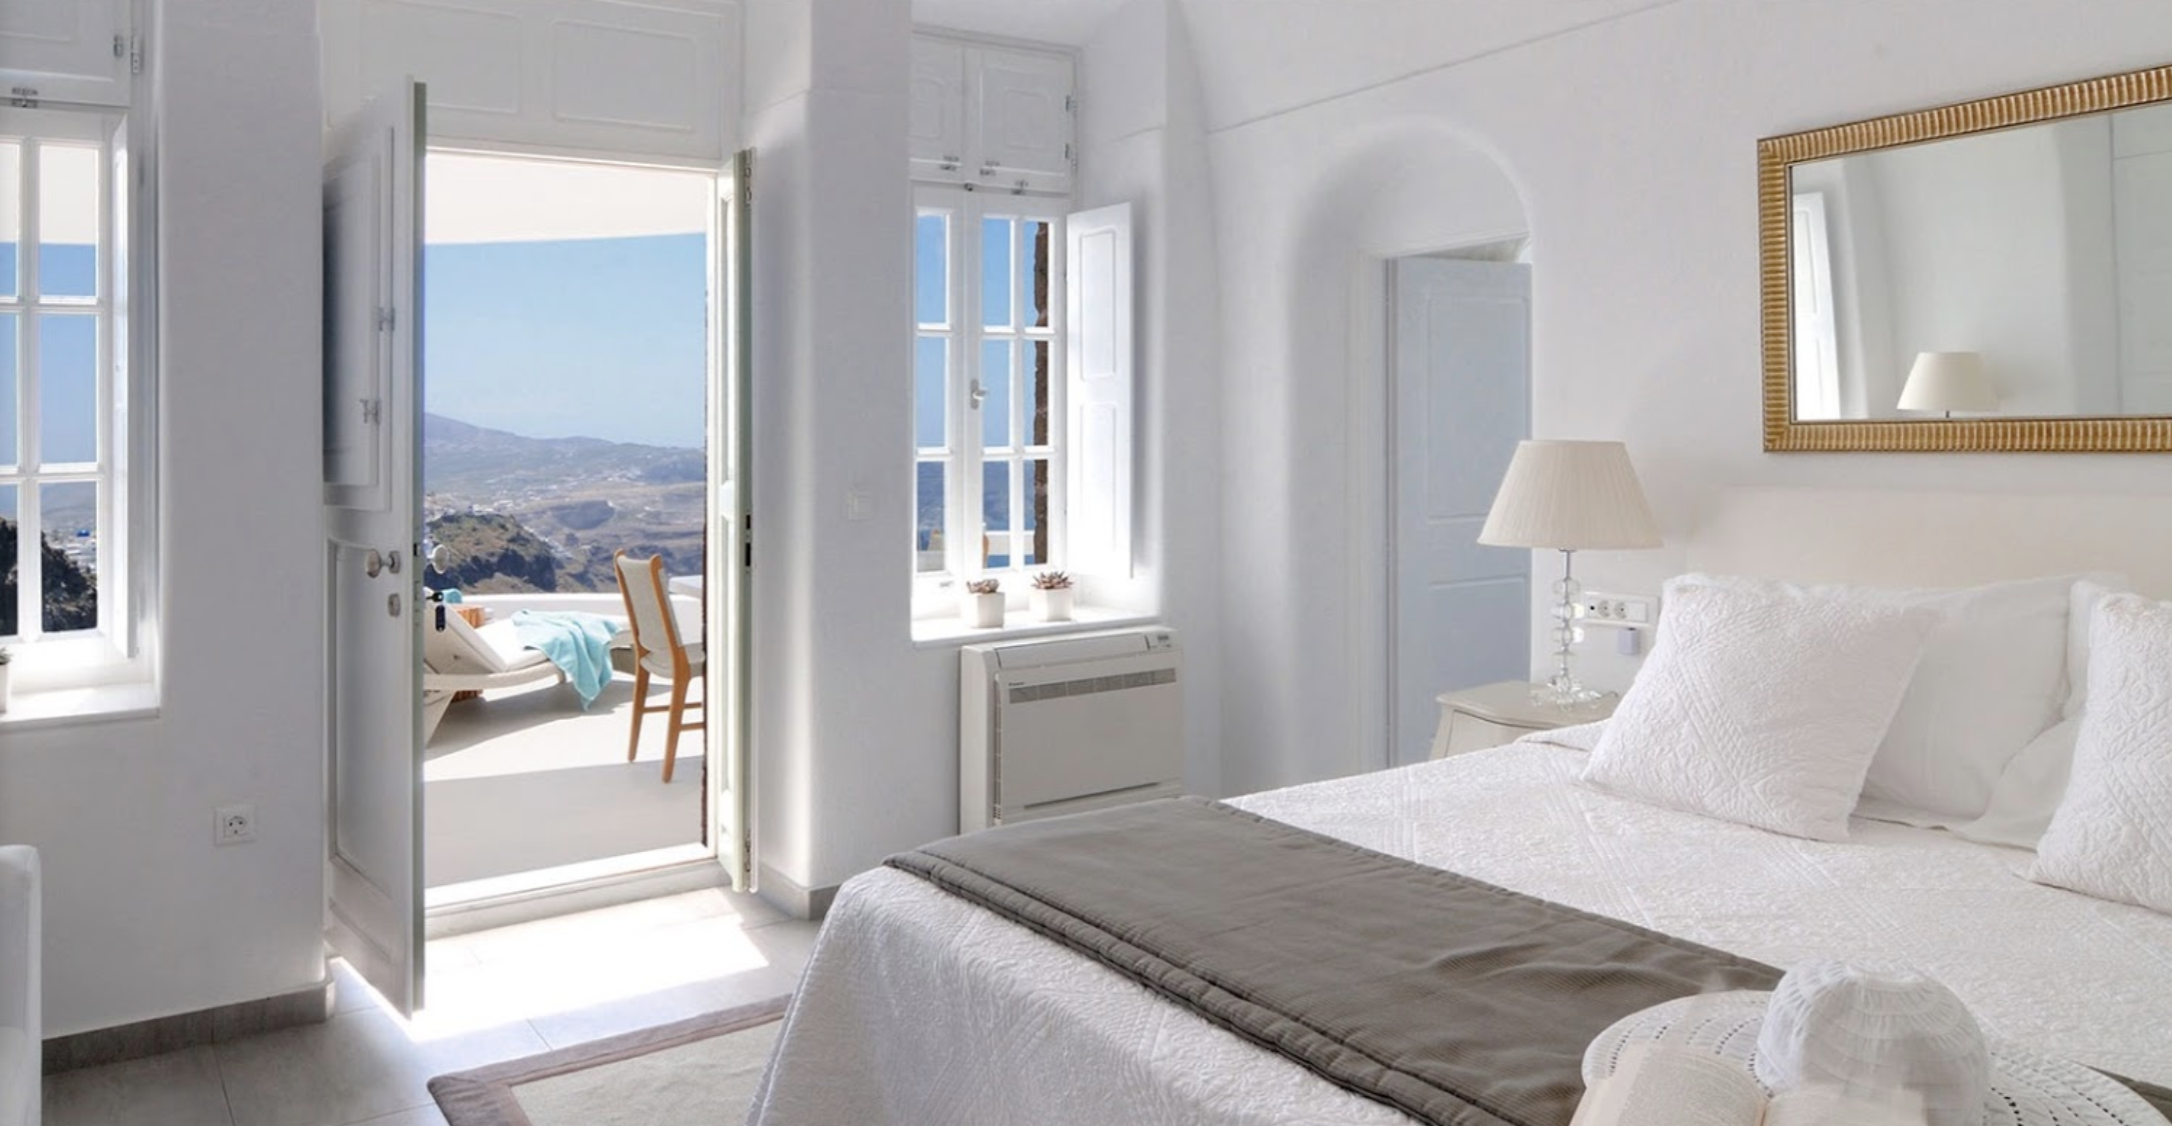 Santorini Bedroom